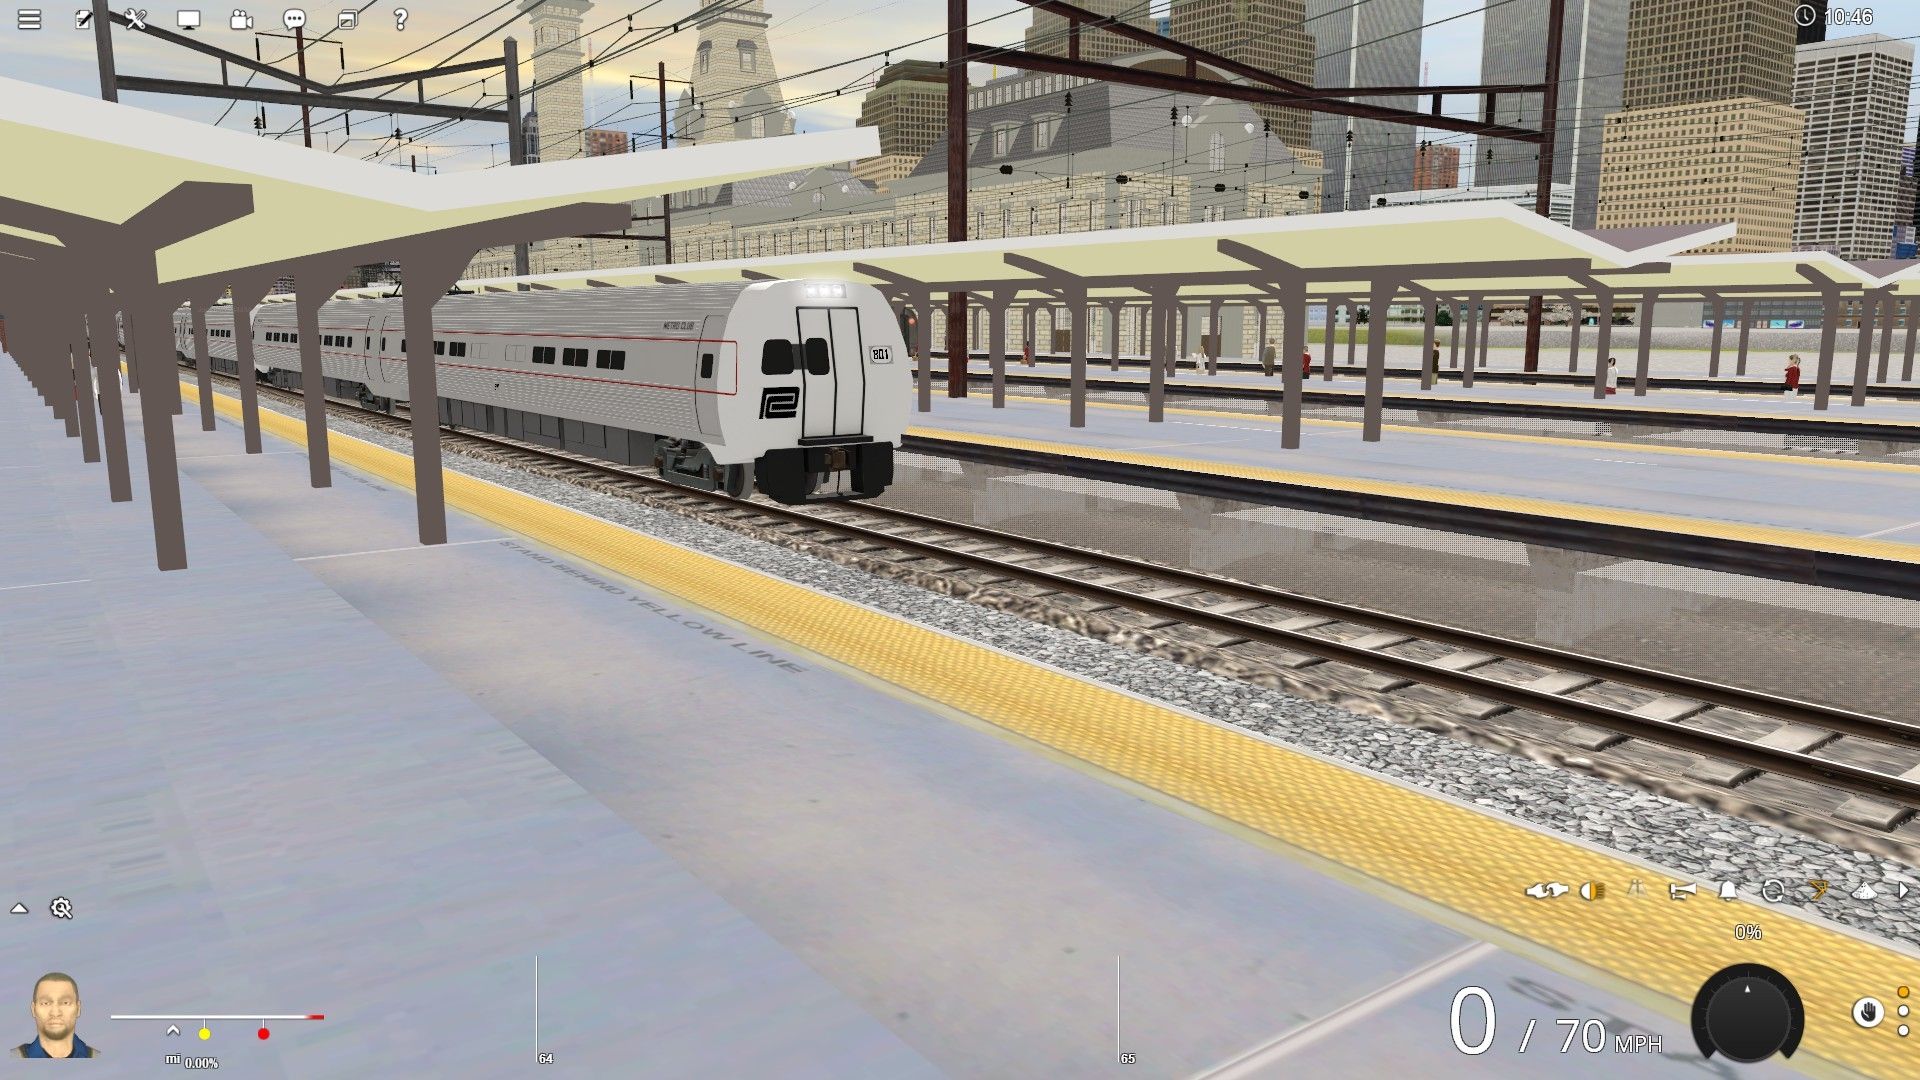 Metroliner-bound-for-metropolis.jpg